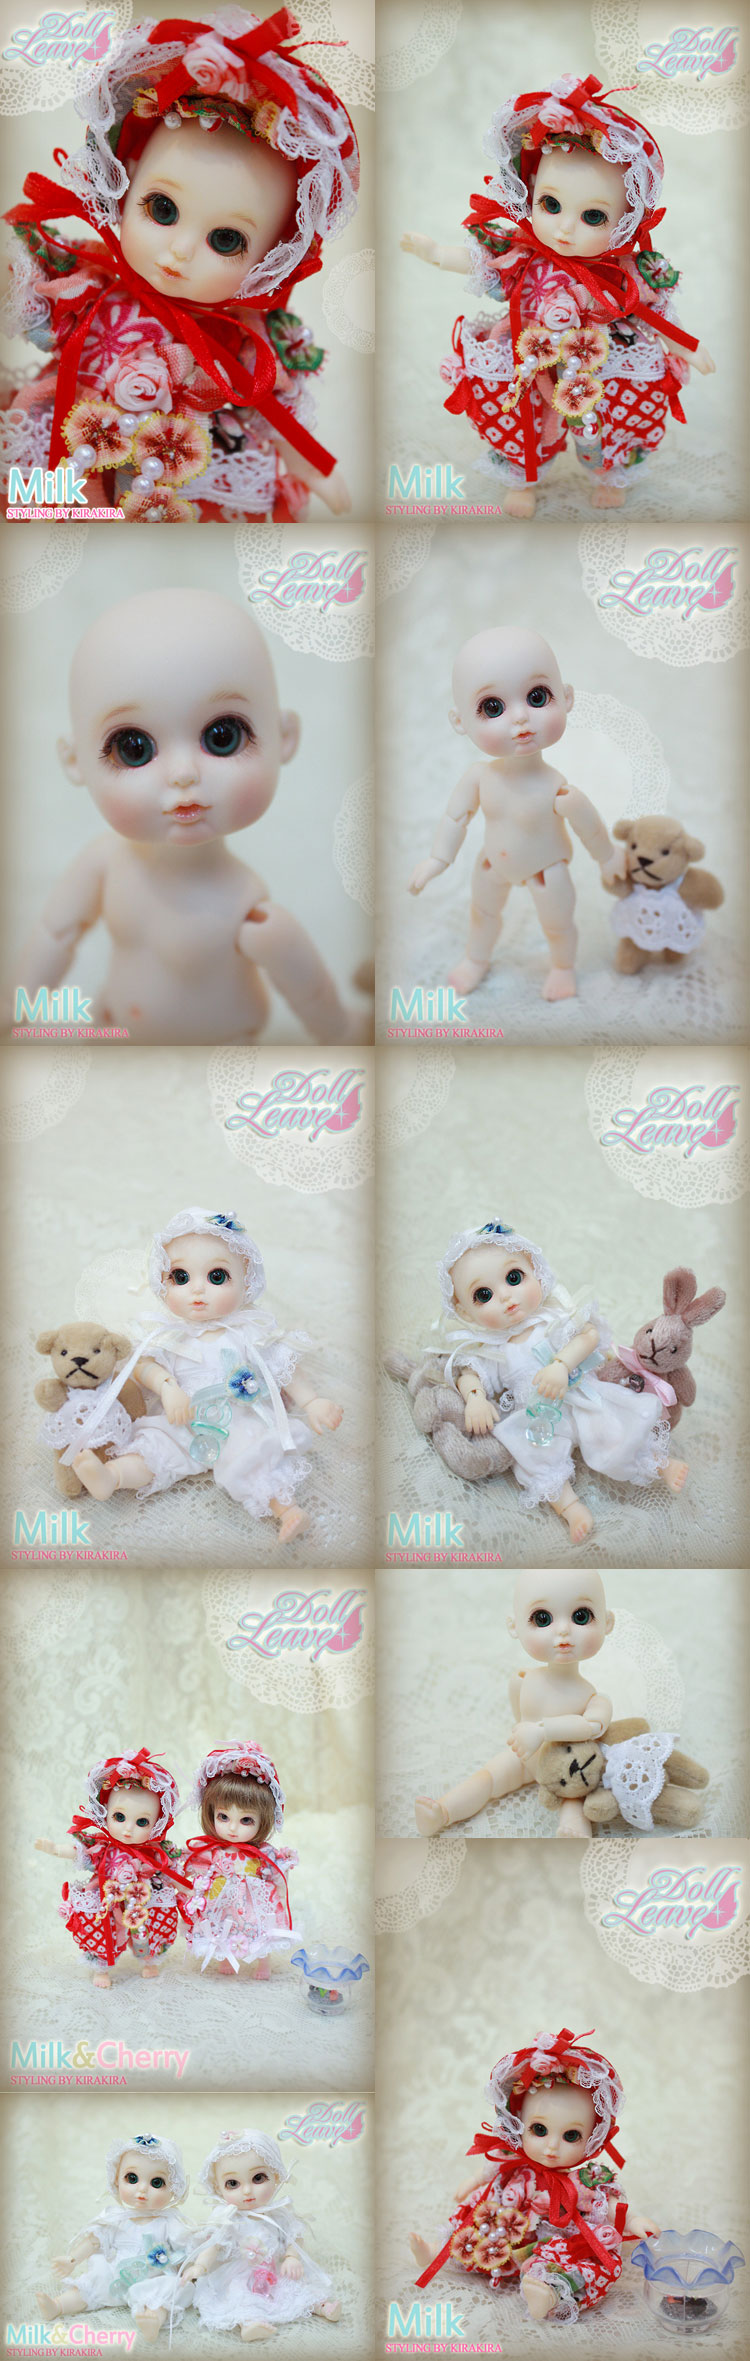 BJD Angel Milk 12cm Boll-jointed doll